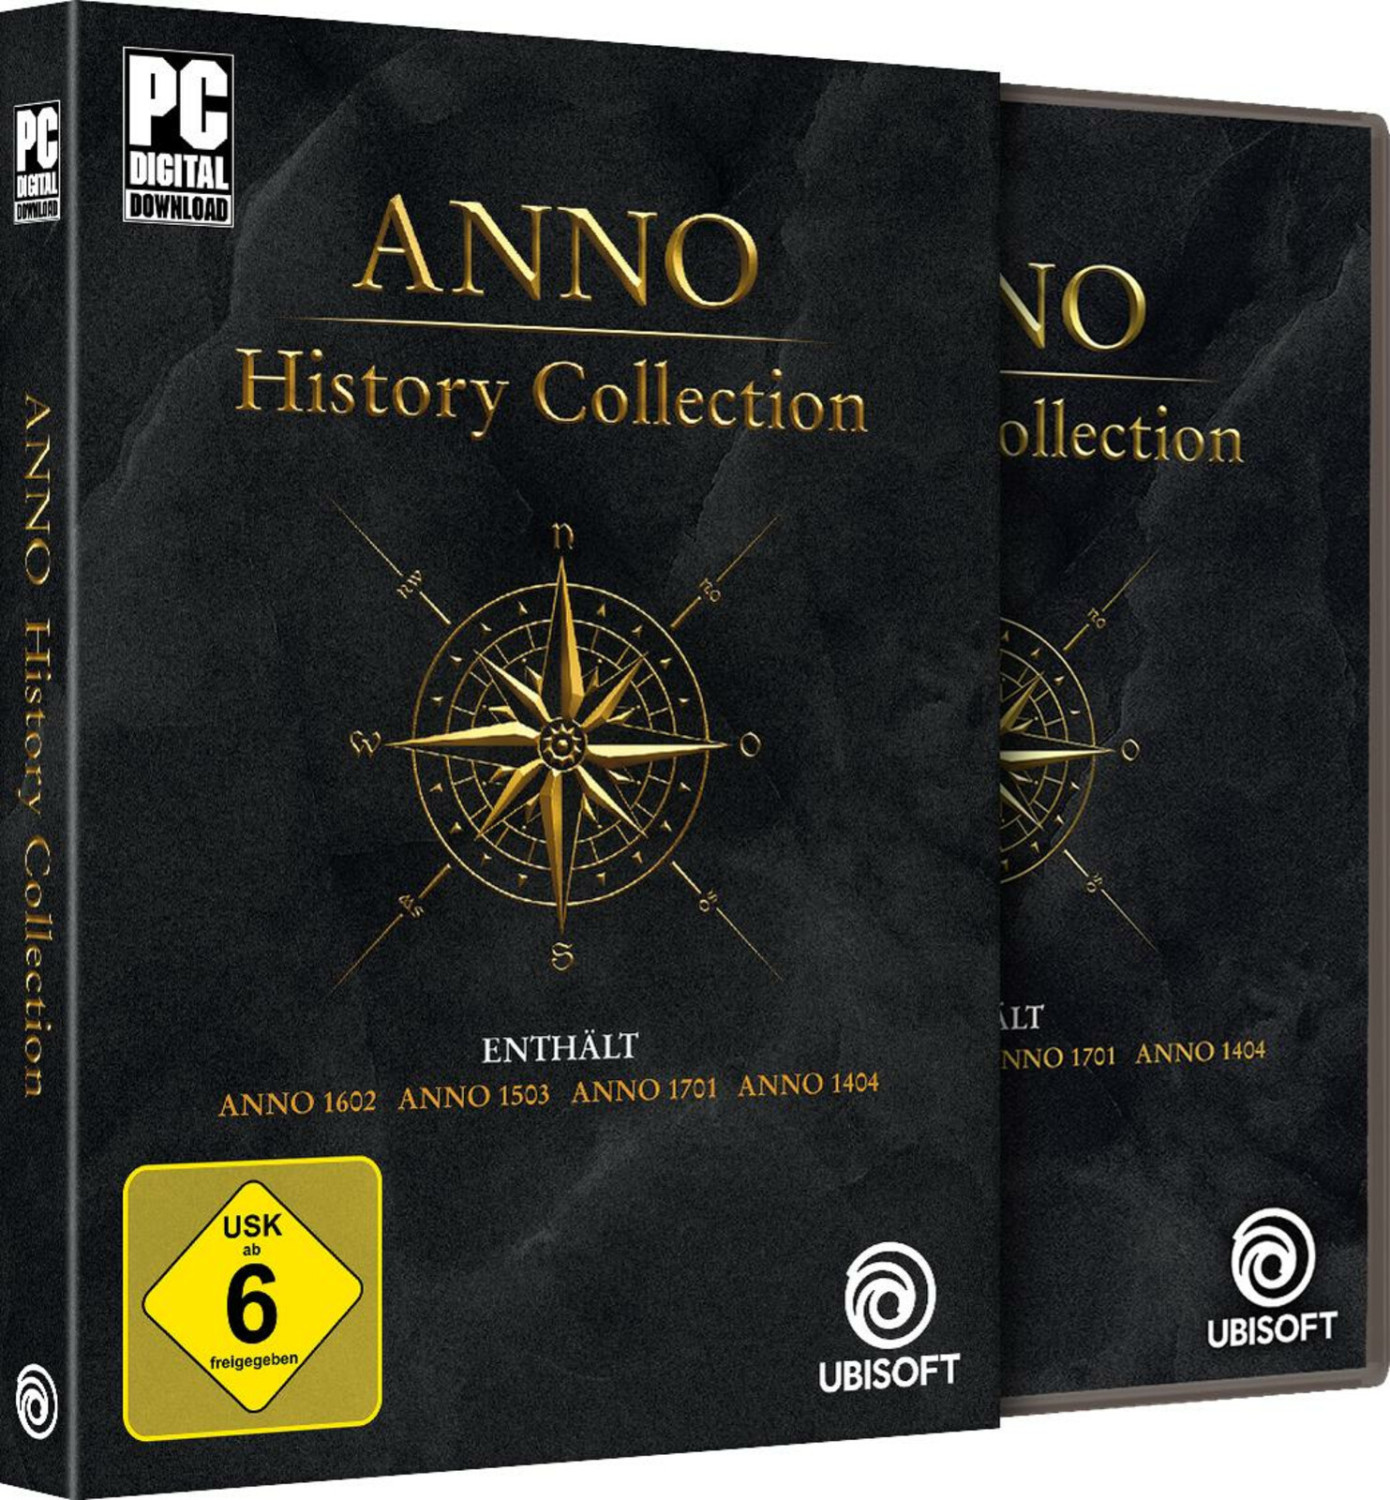 ab (PC) Preisvergleich bei | Collection € History 14,99 Anno: